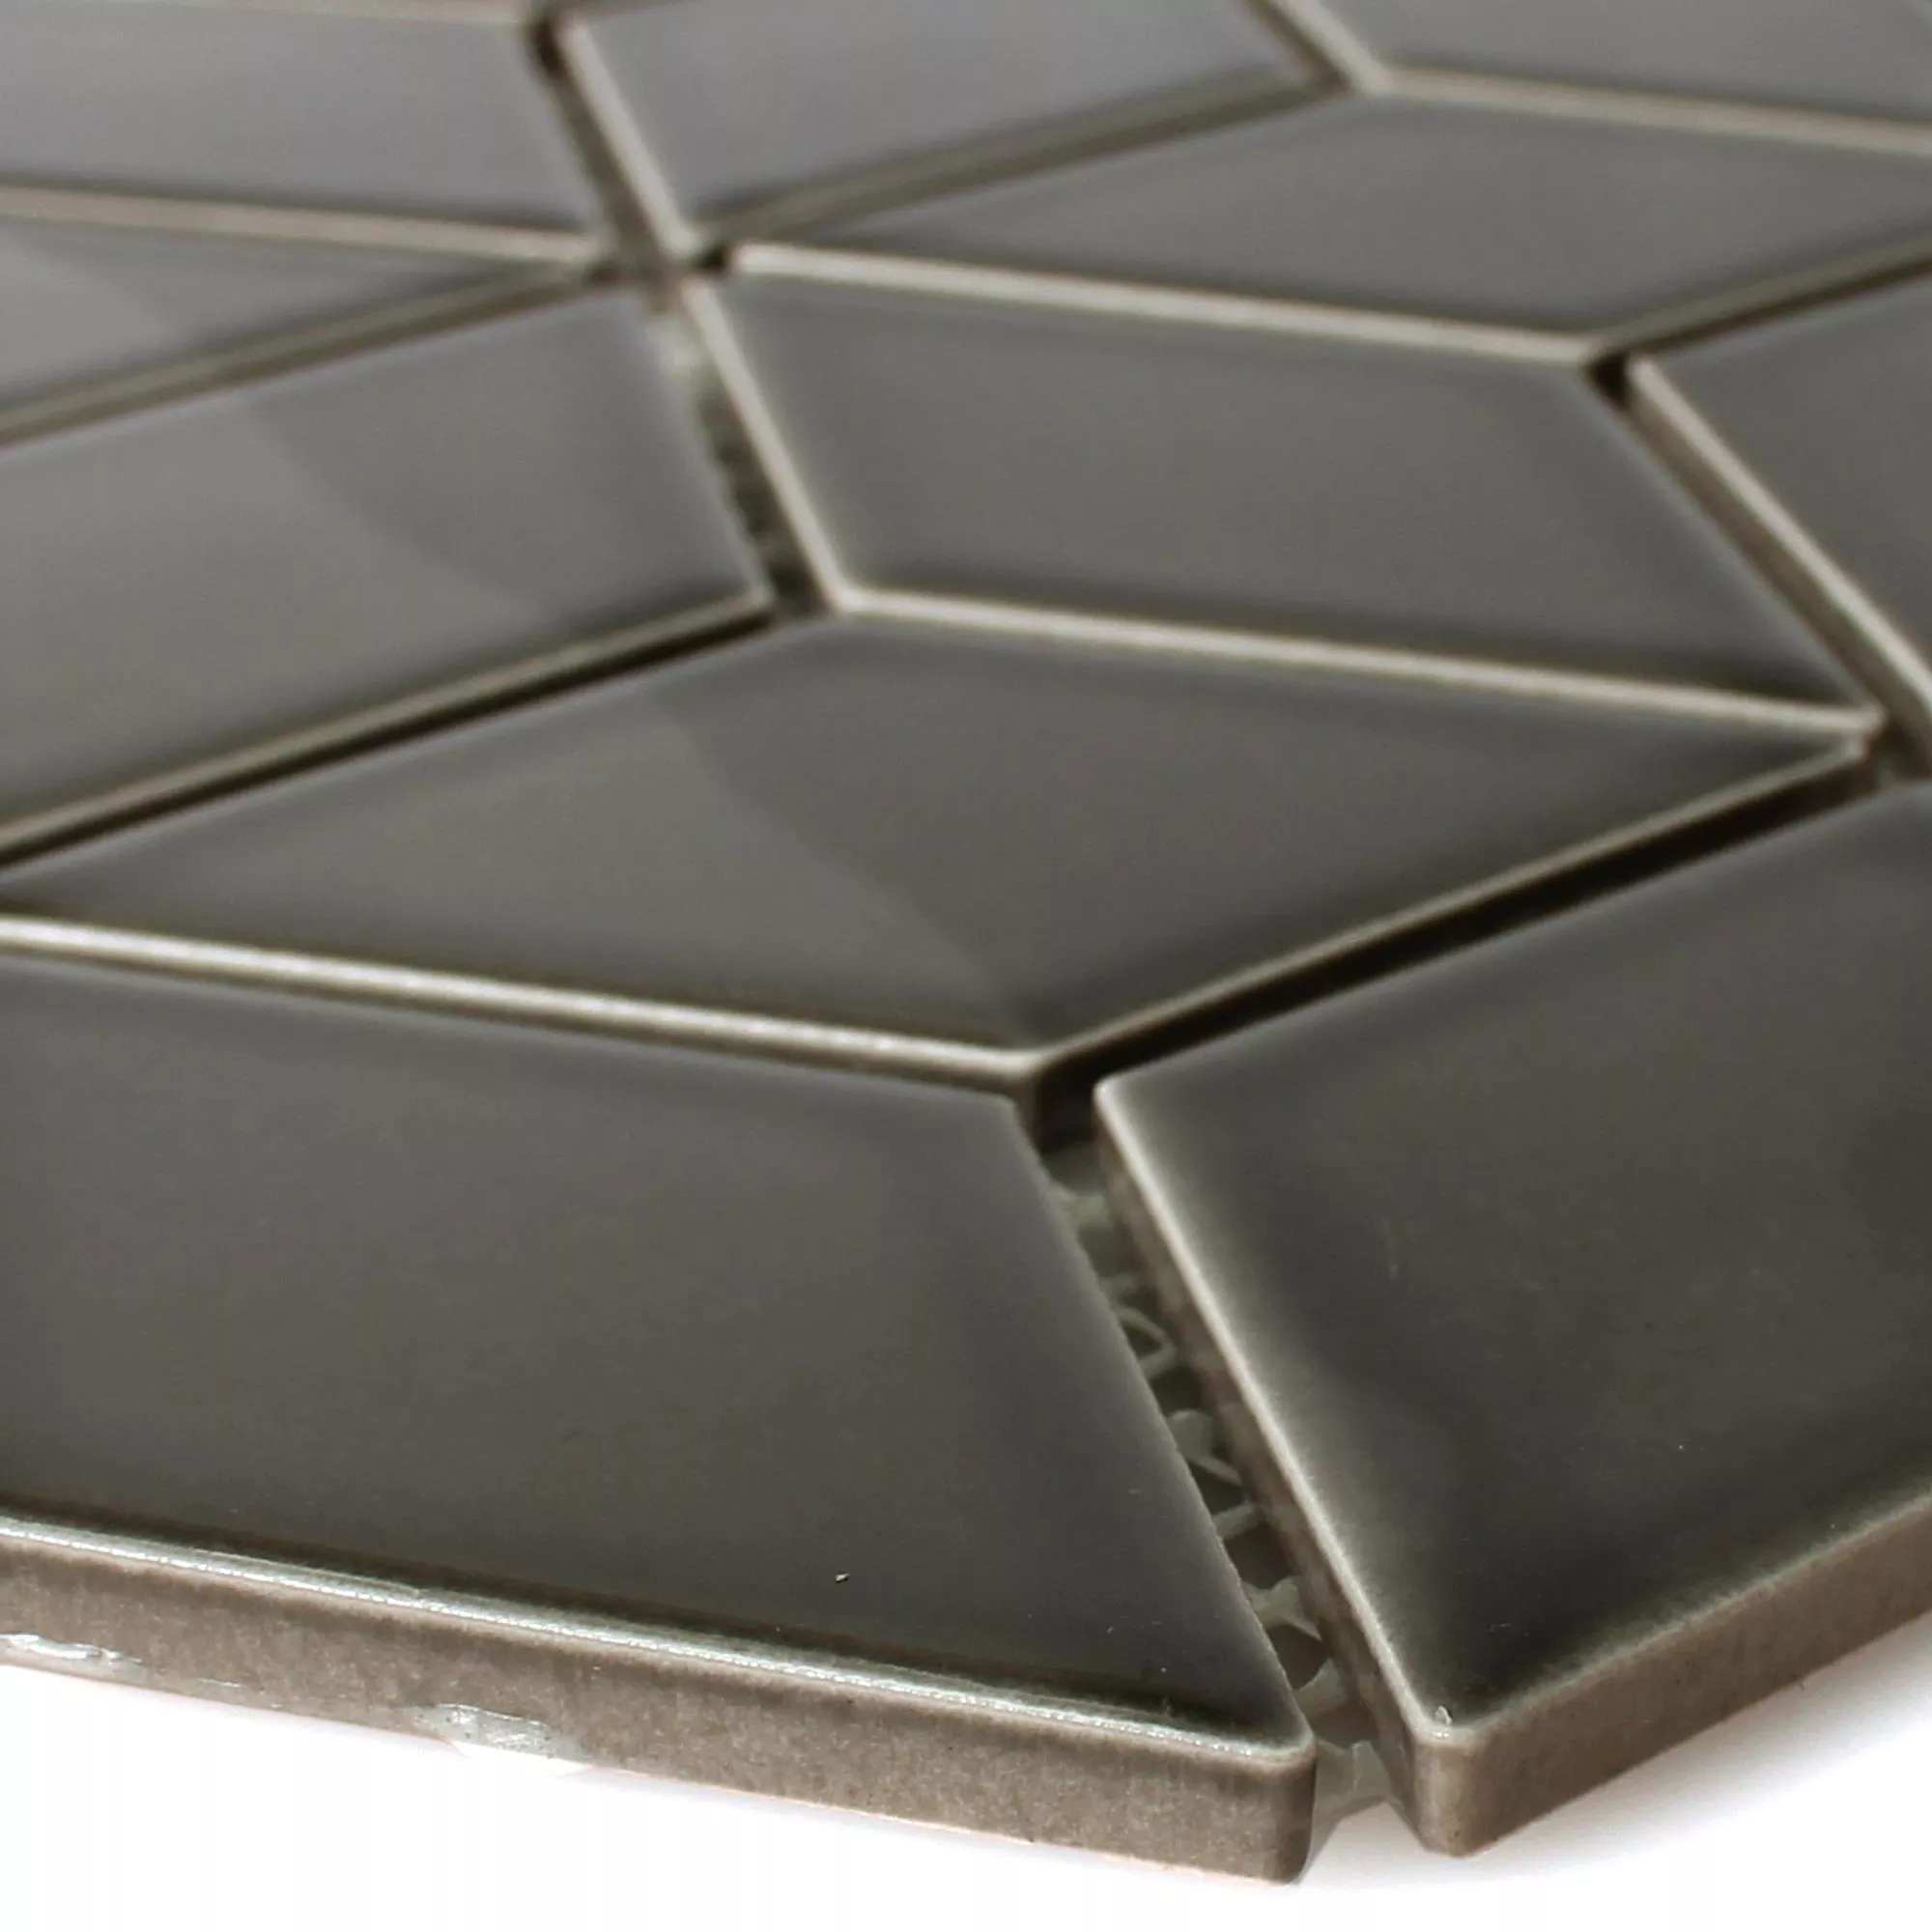 Ceramic Mosaic Tiles Cavalier 3D Cube Black Glossy